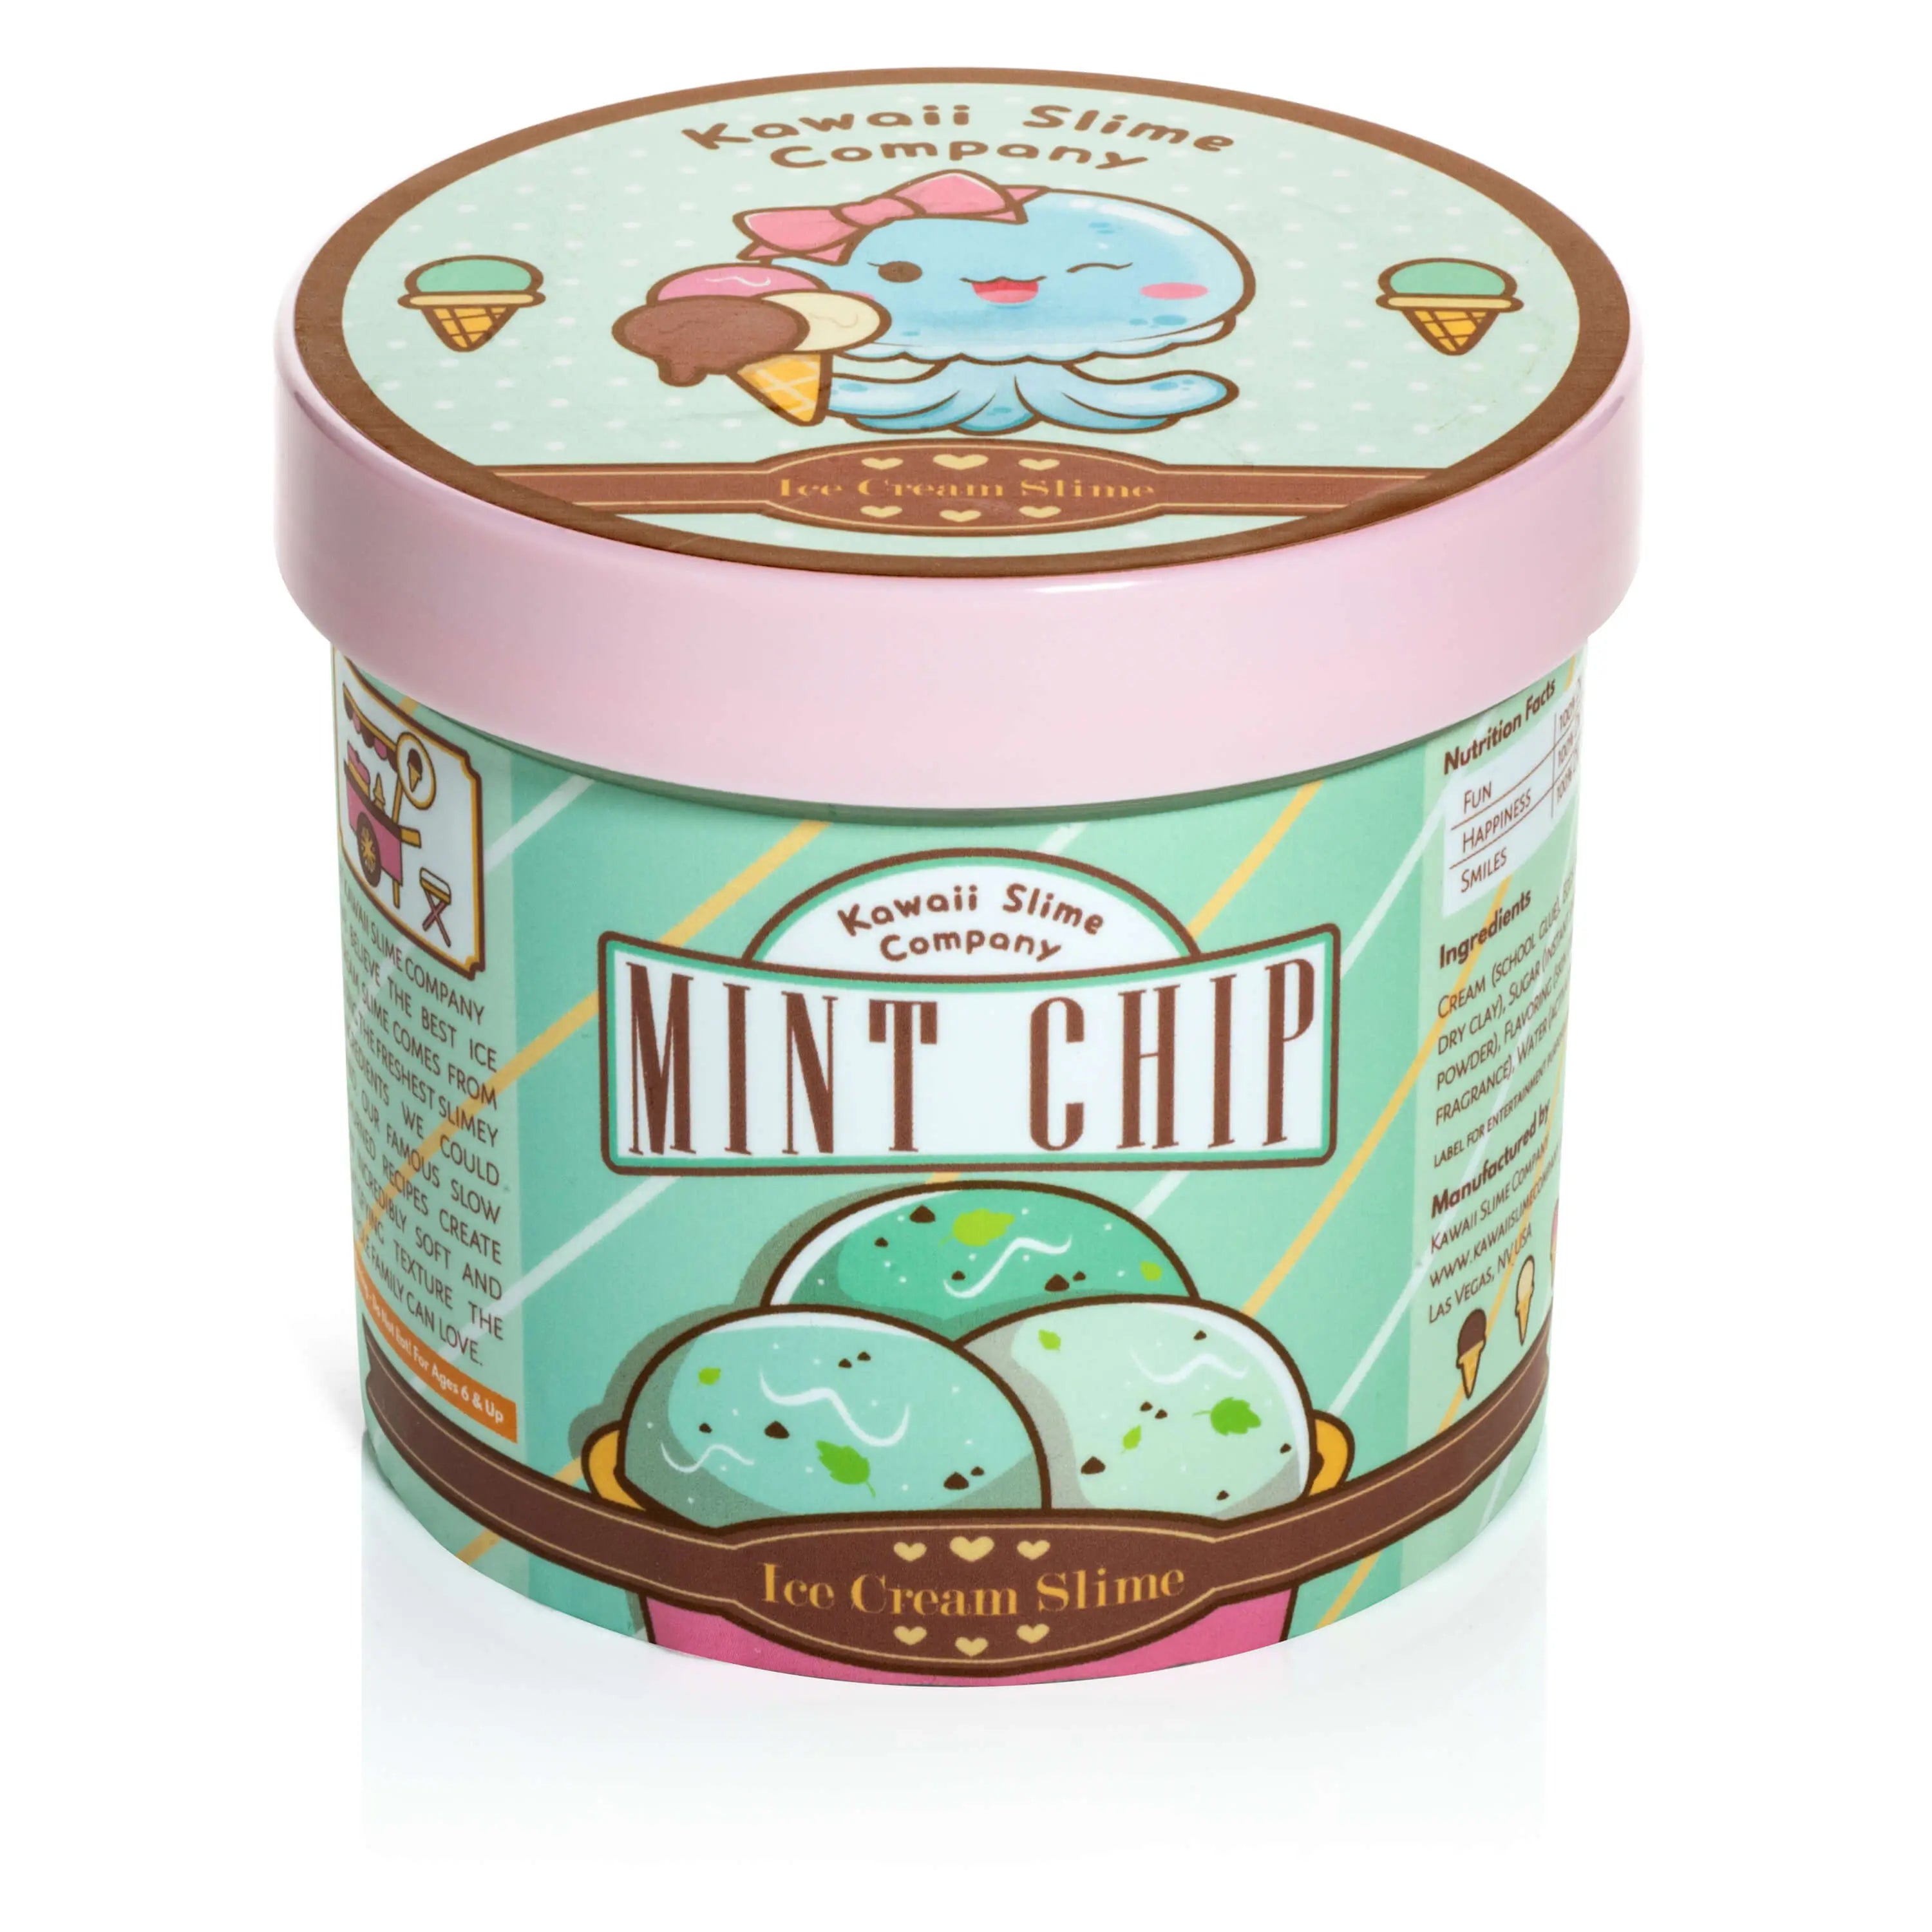 Mint Chip Ice Cream Slime by Kawaii Slime